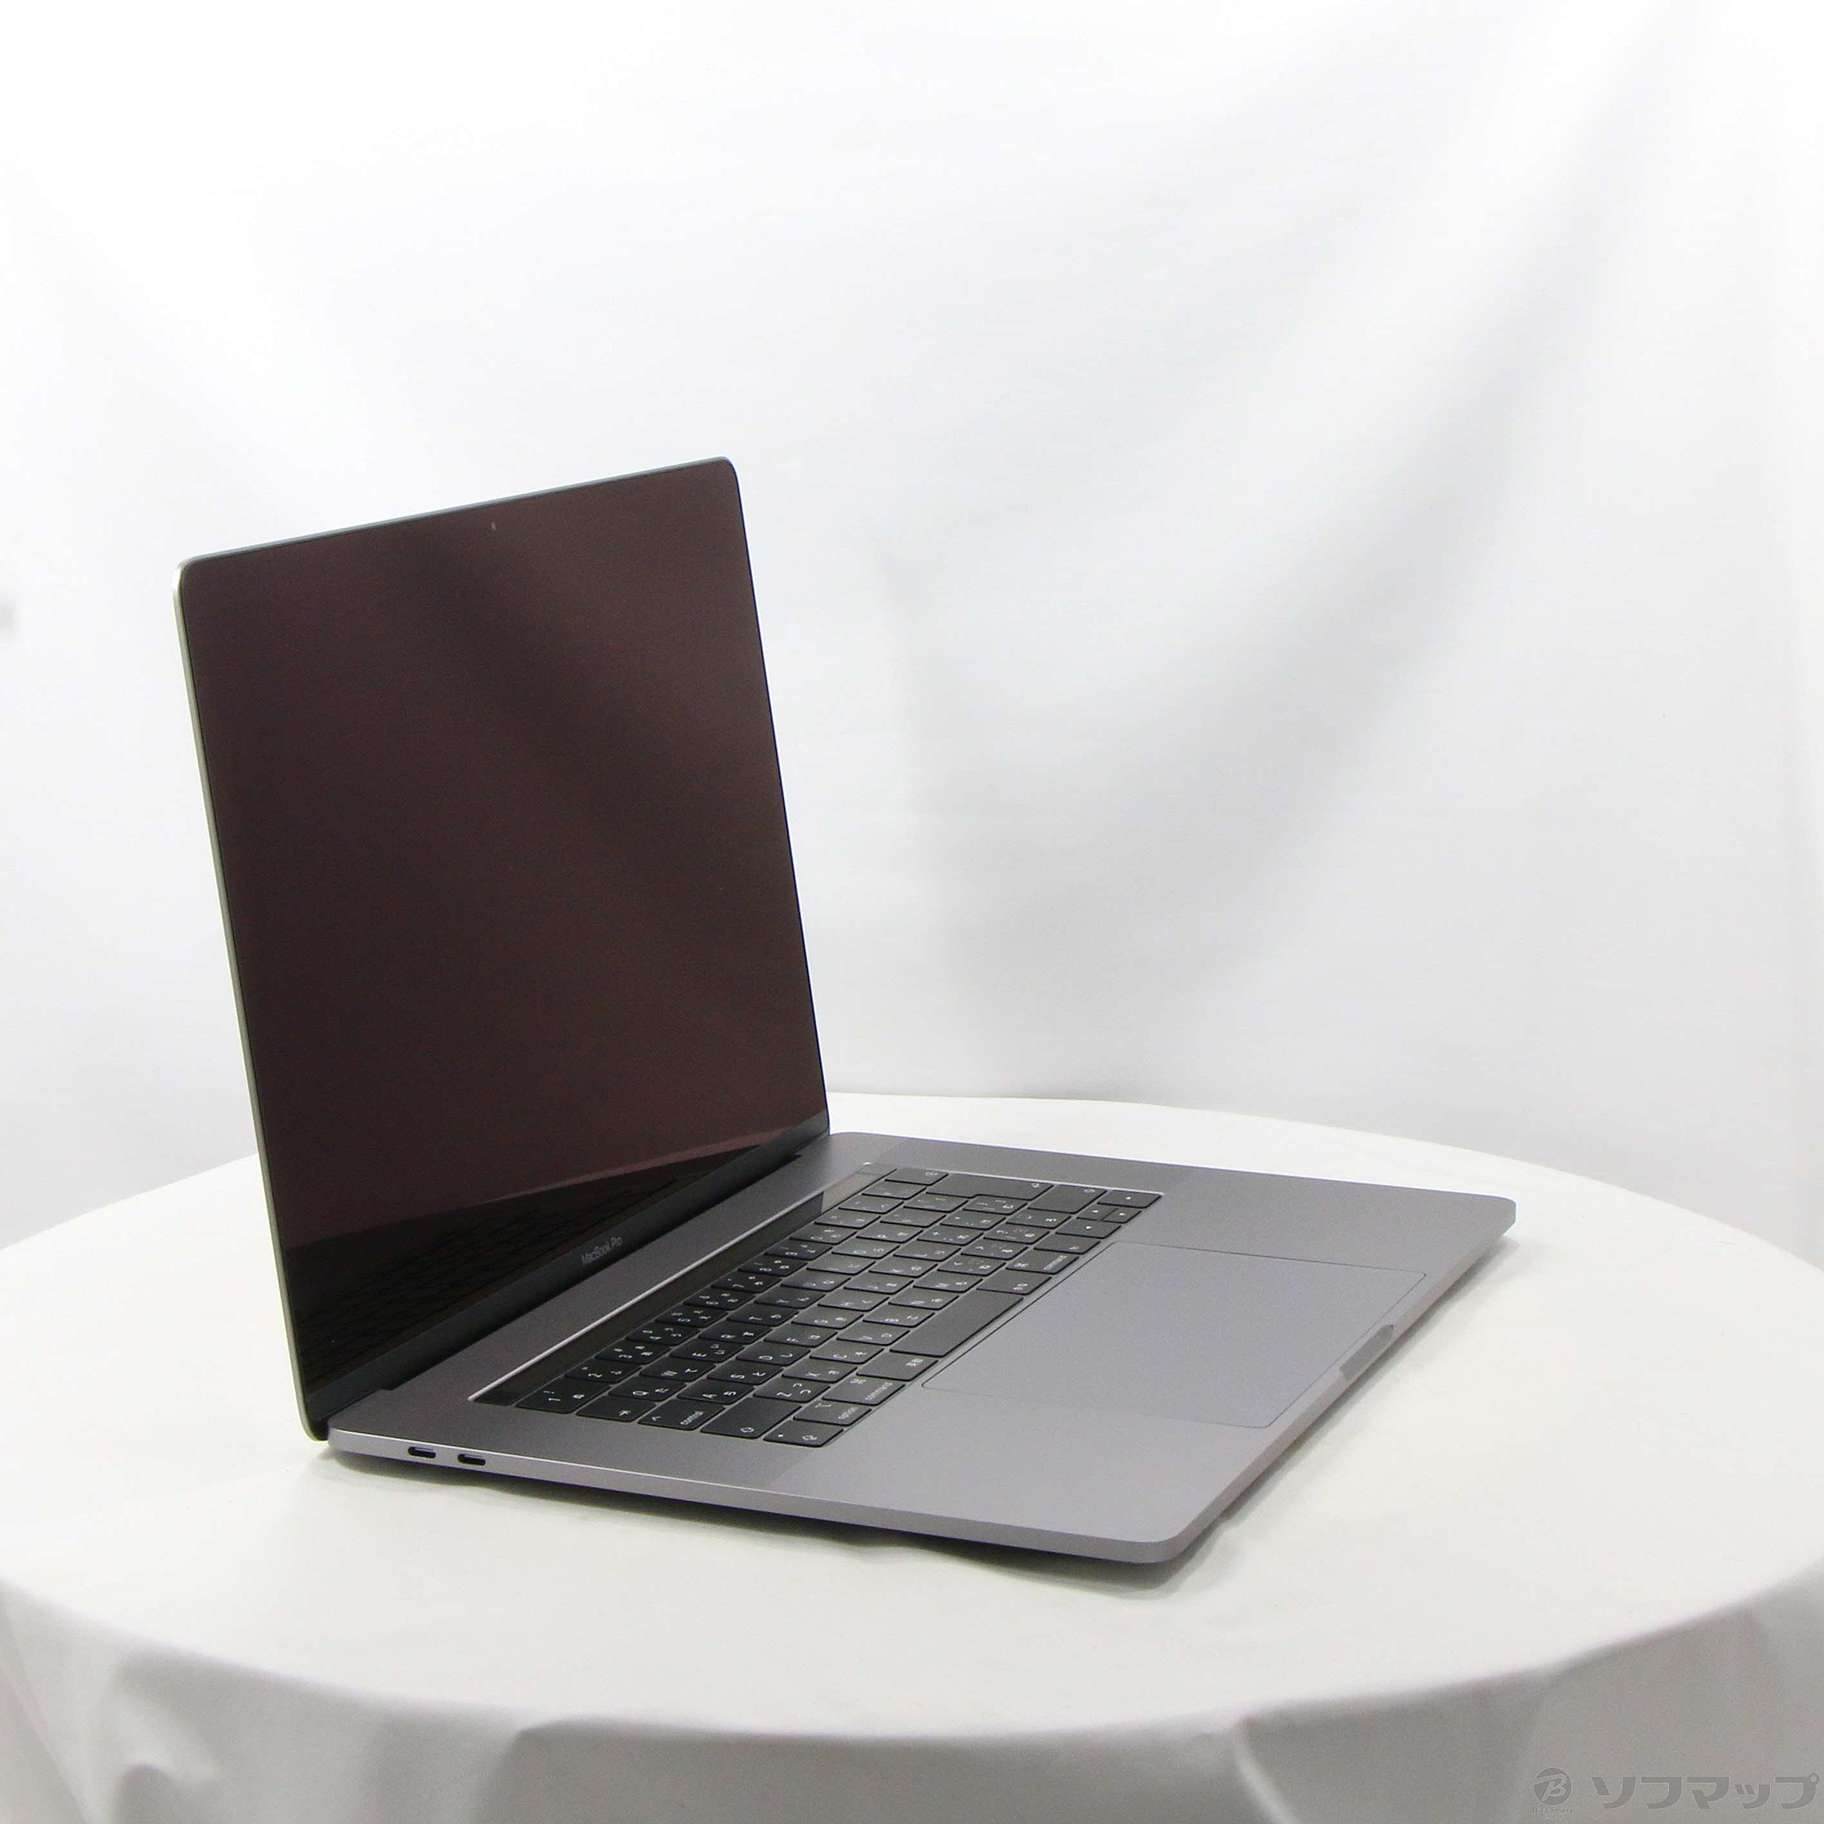 中古】MacBook Pro 15-inch Mid 2018 MR942J／A Core_i7 2.6GHz 16GB